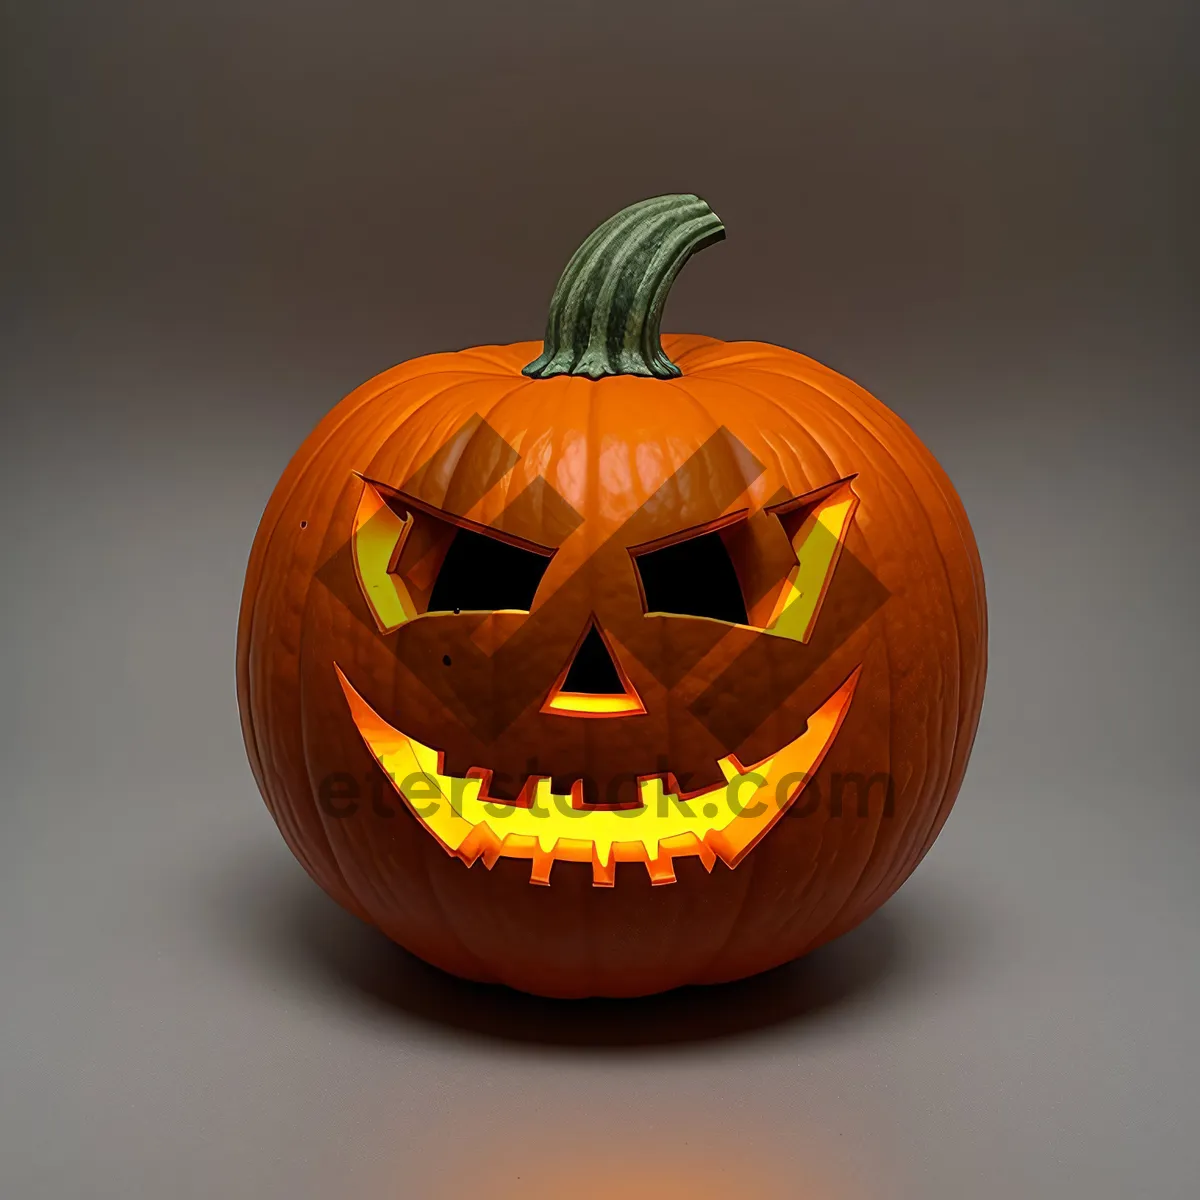 Picture of Spooky Pumpkin Jack-o'-Lantern Halloween Decoration